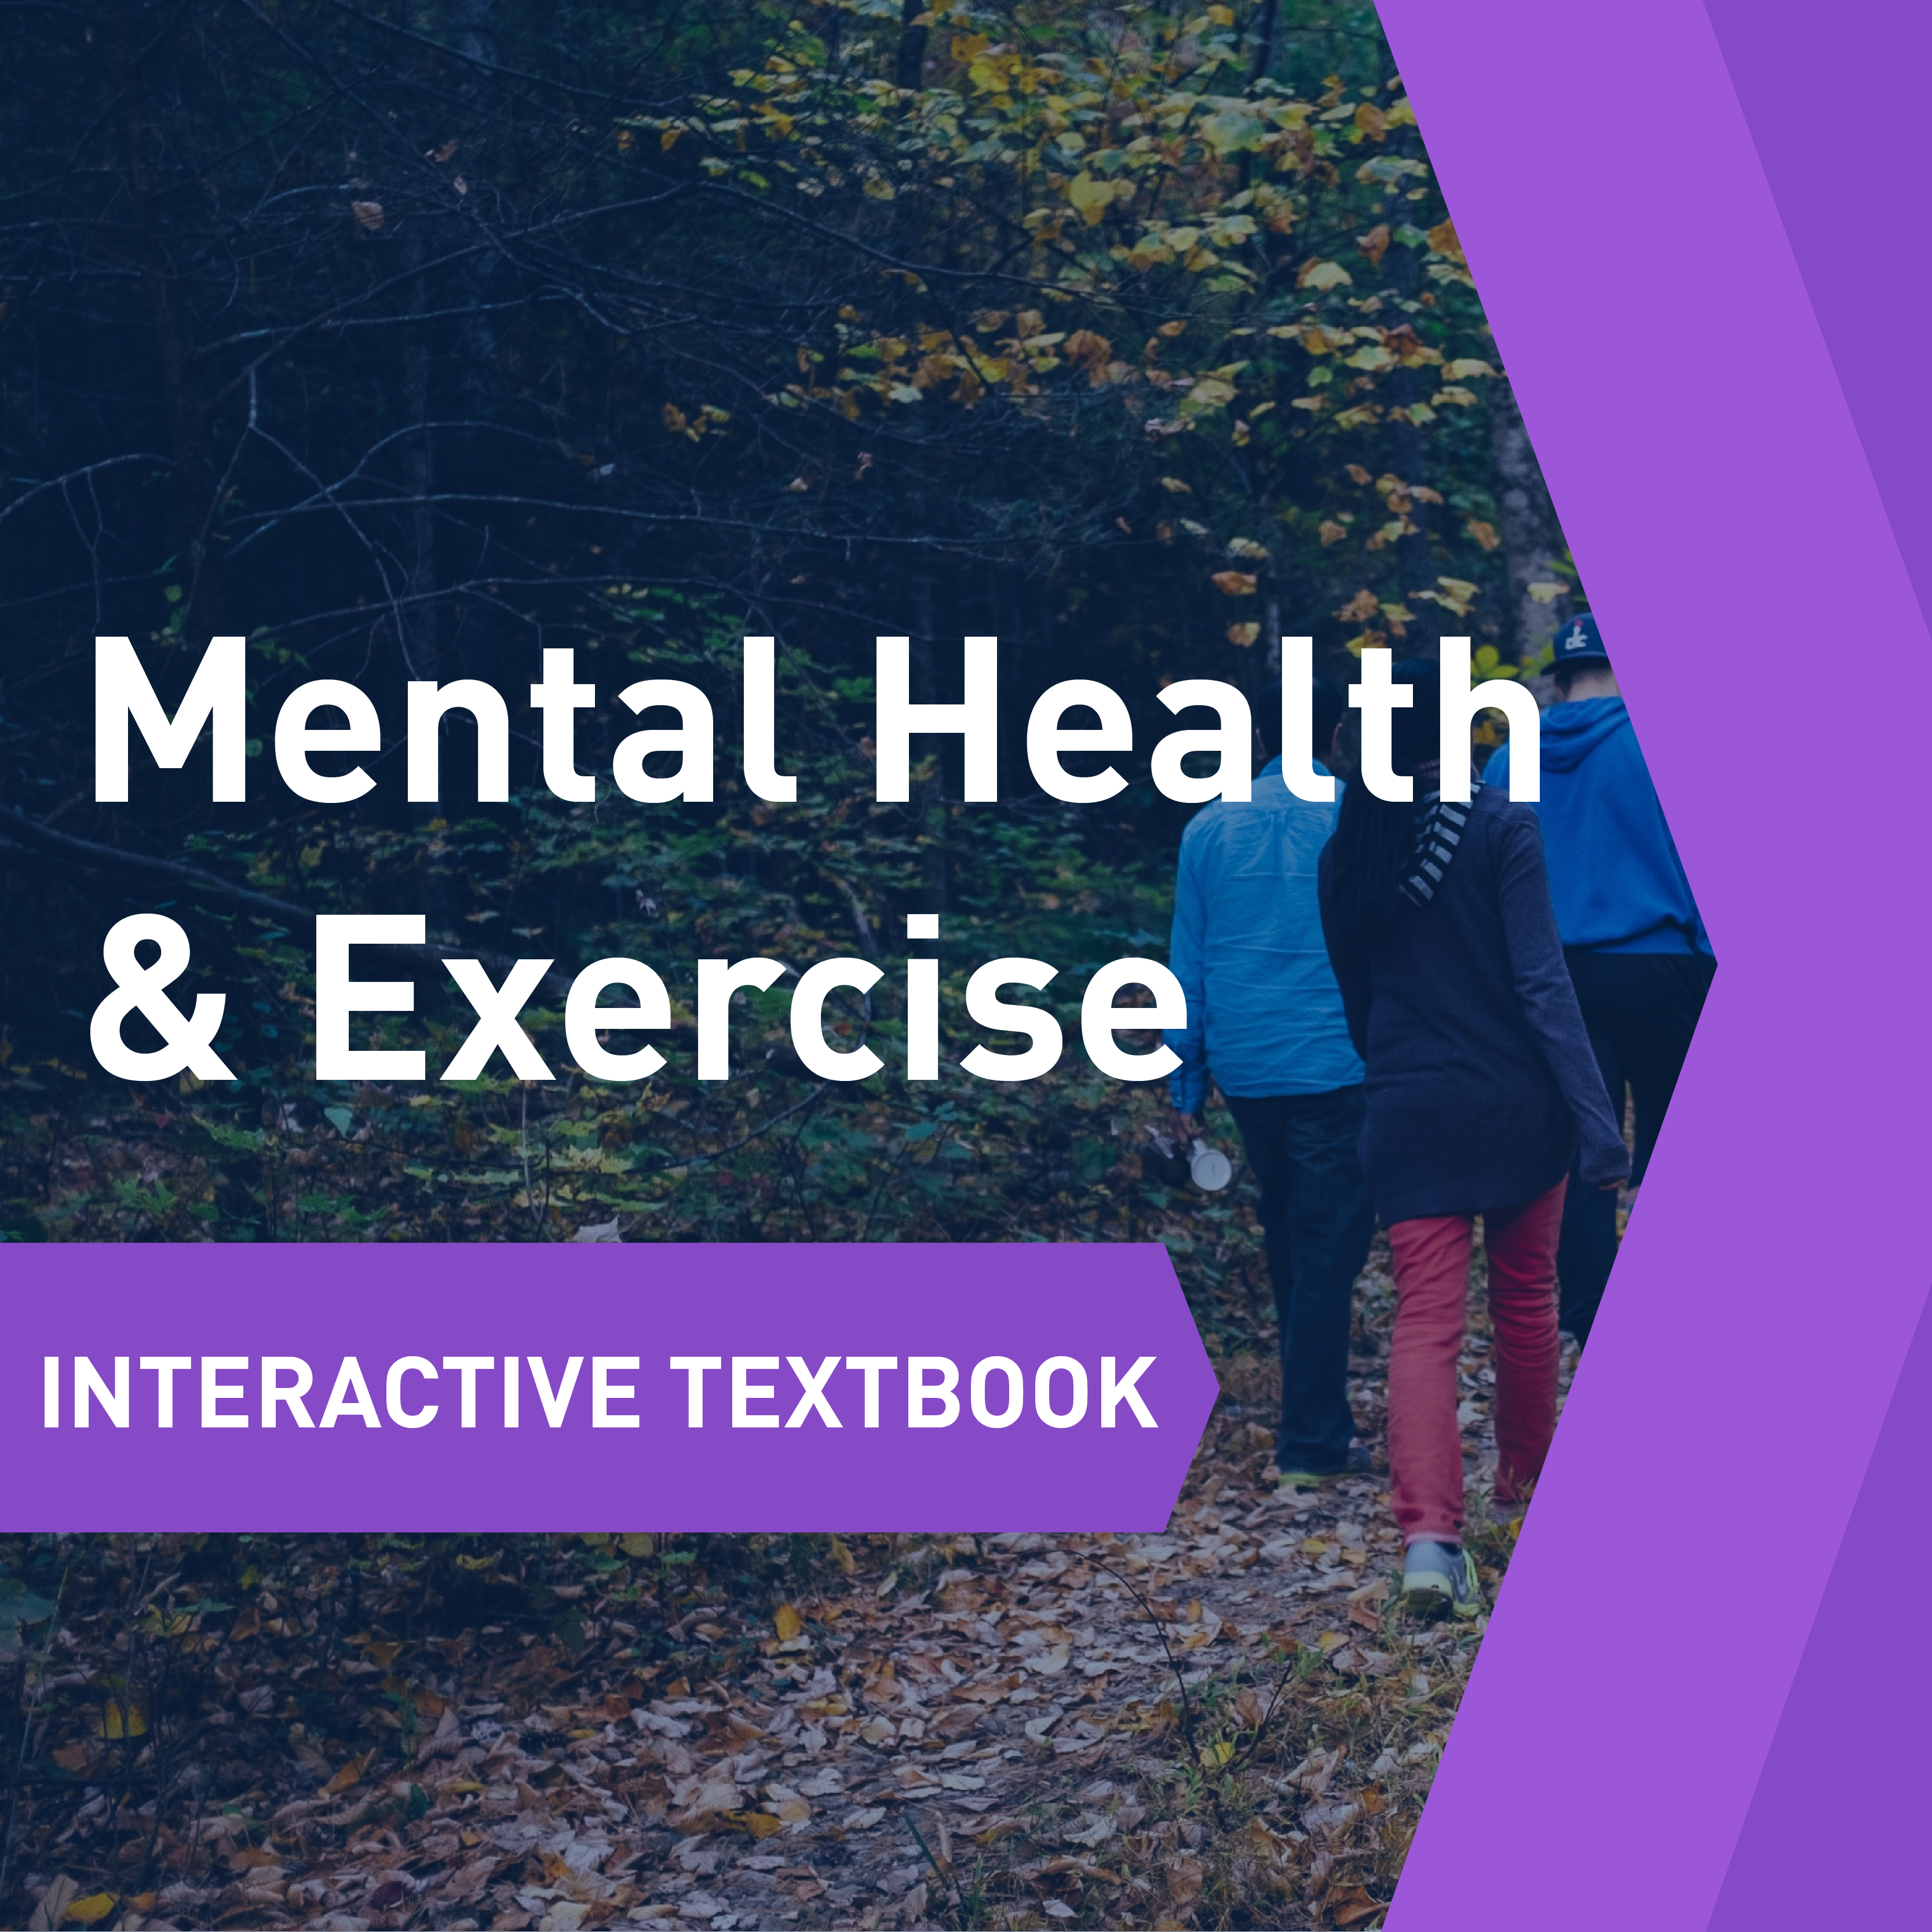 Interactive Digital Textbook: Mental Health & Exercise